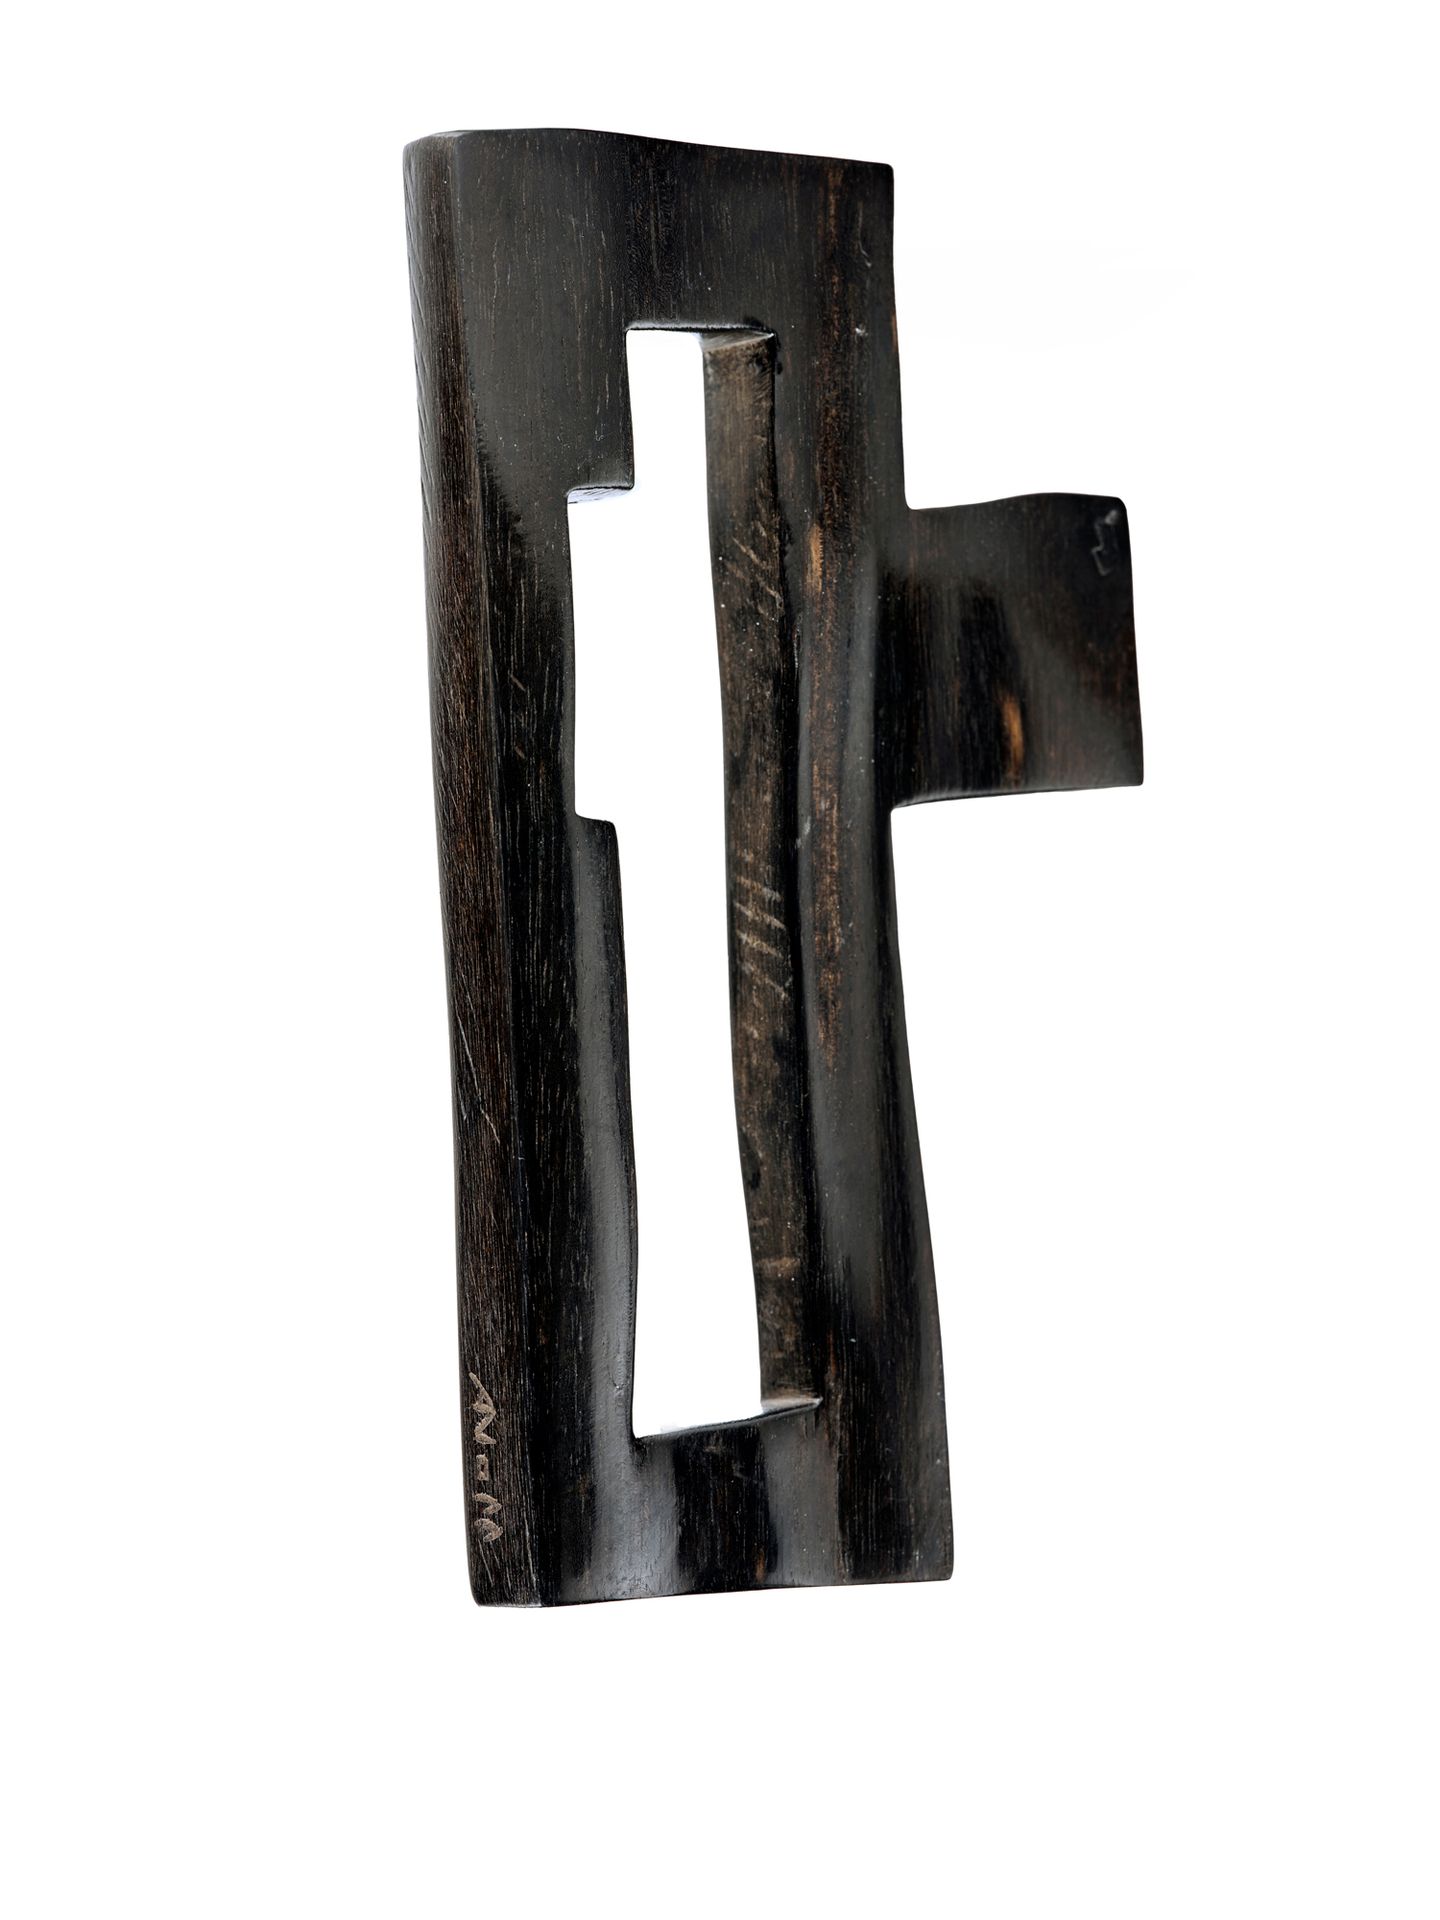 Alexandre NOLL (1890-1970) 可悬挂或竖立的黑檀木雕刻单斜十字架
刻有 "ANoll "签名
约 1950 年
长度：19.5 厘米

&hellip;